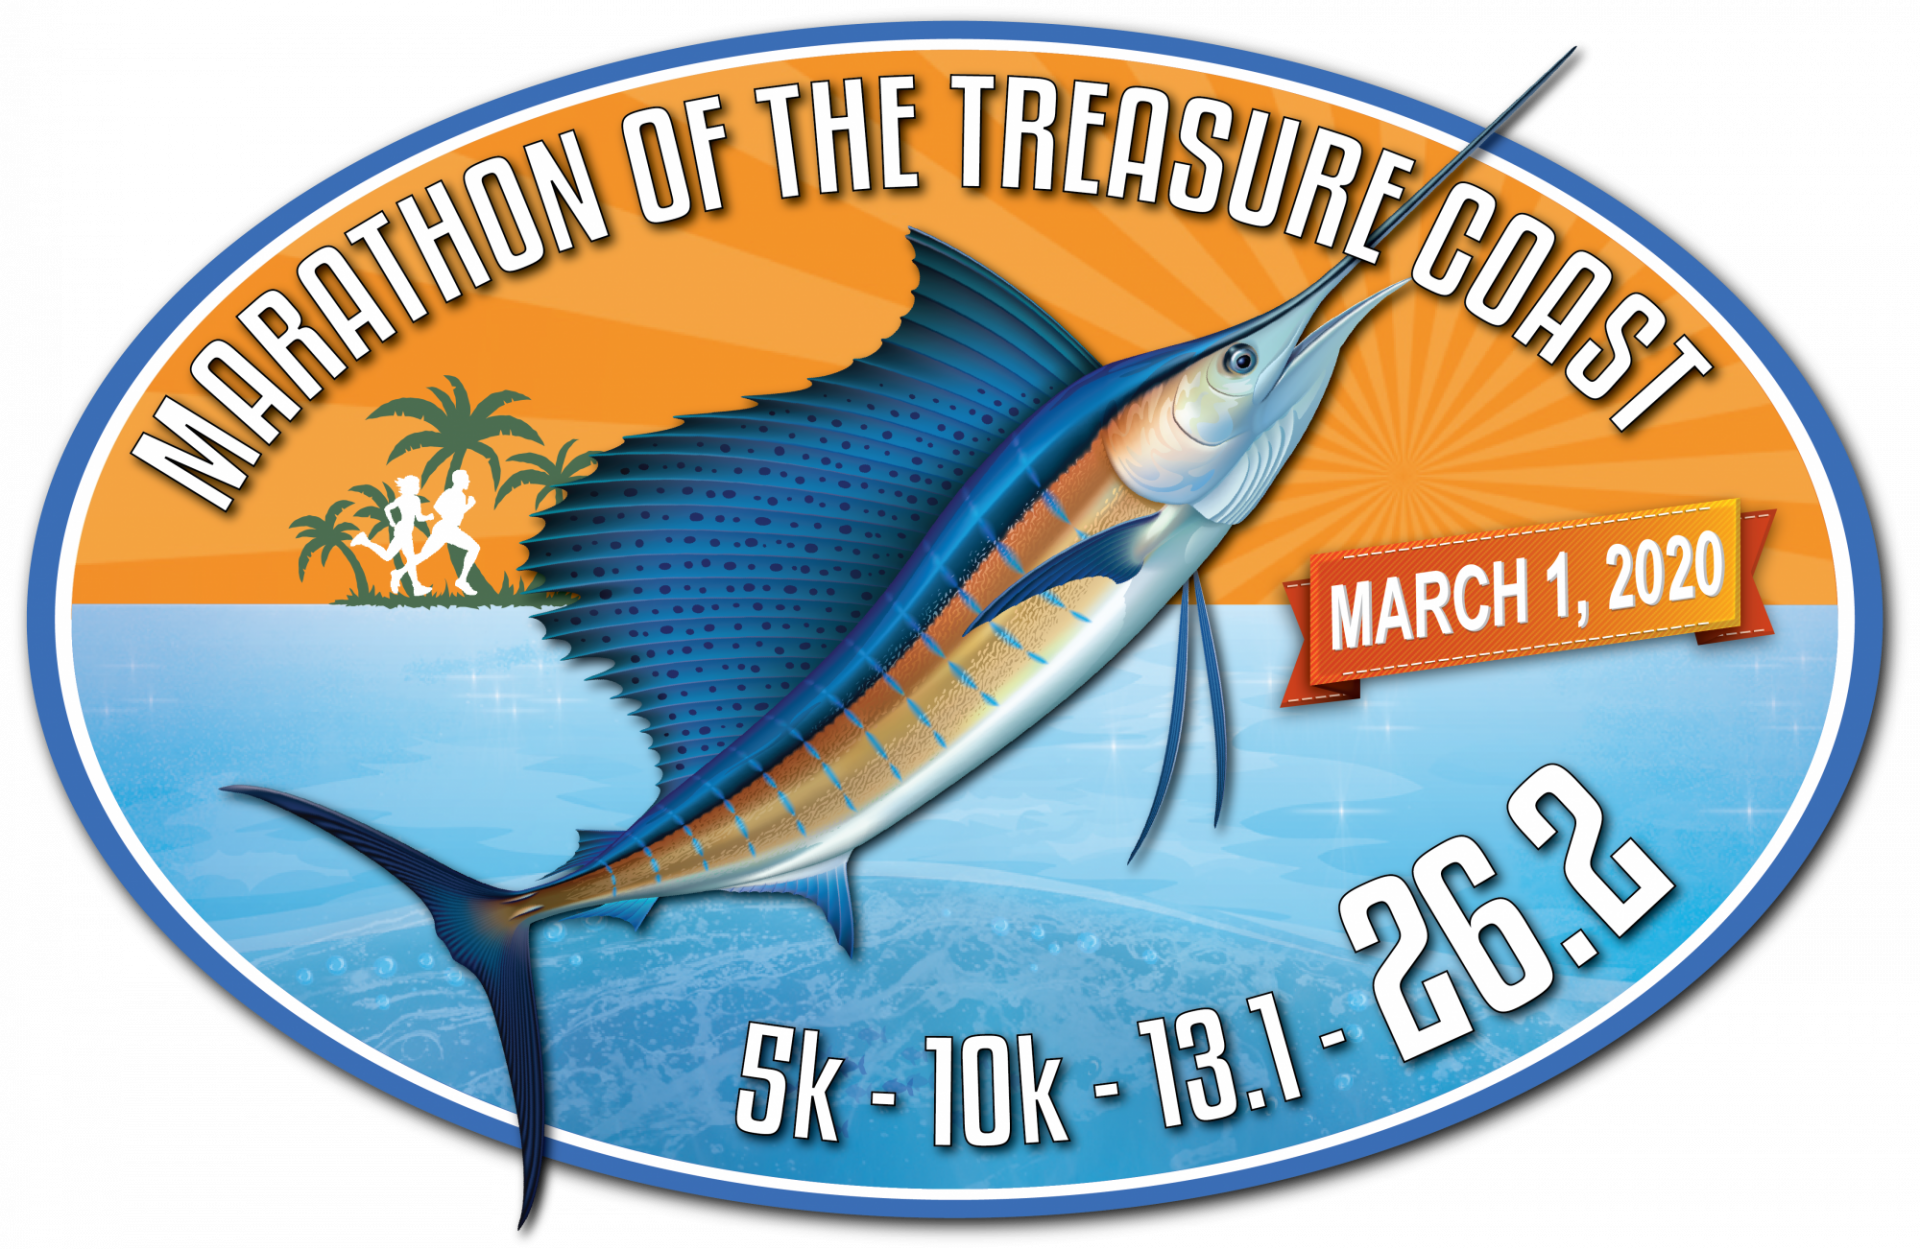 Marathon of the Treasure Coast on March 1, 2020 -- Stuart FL